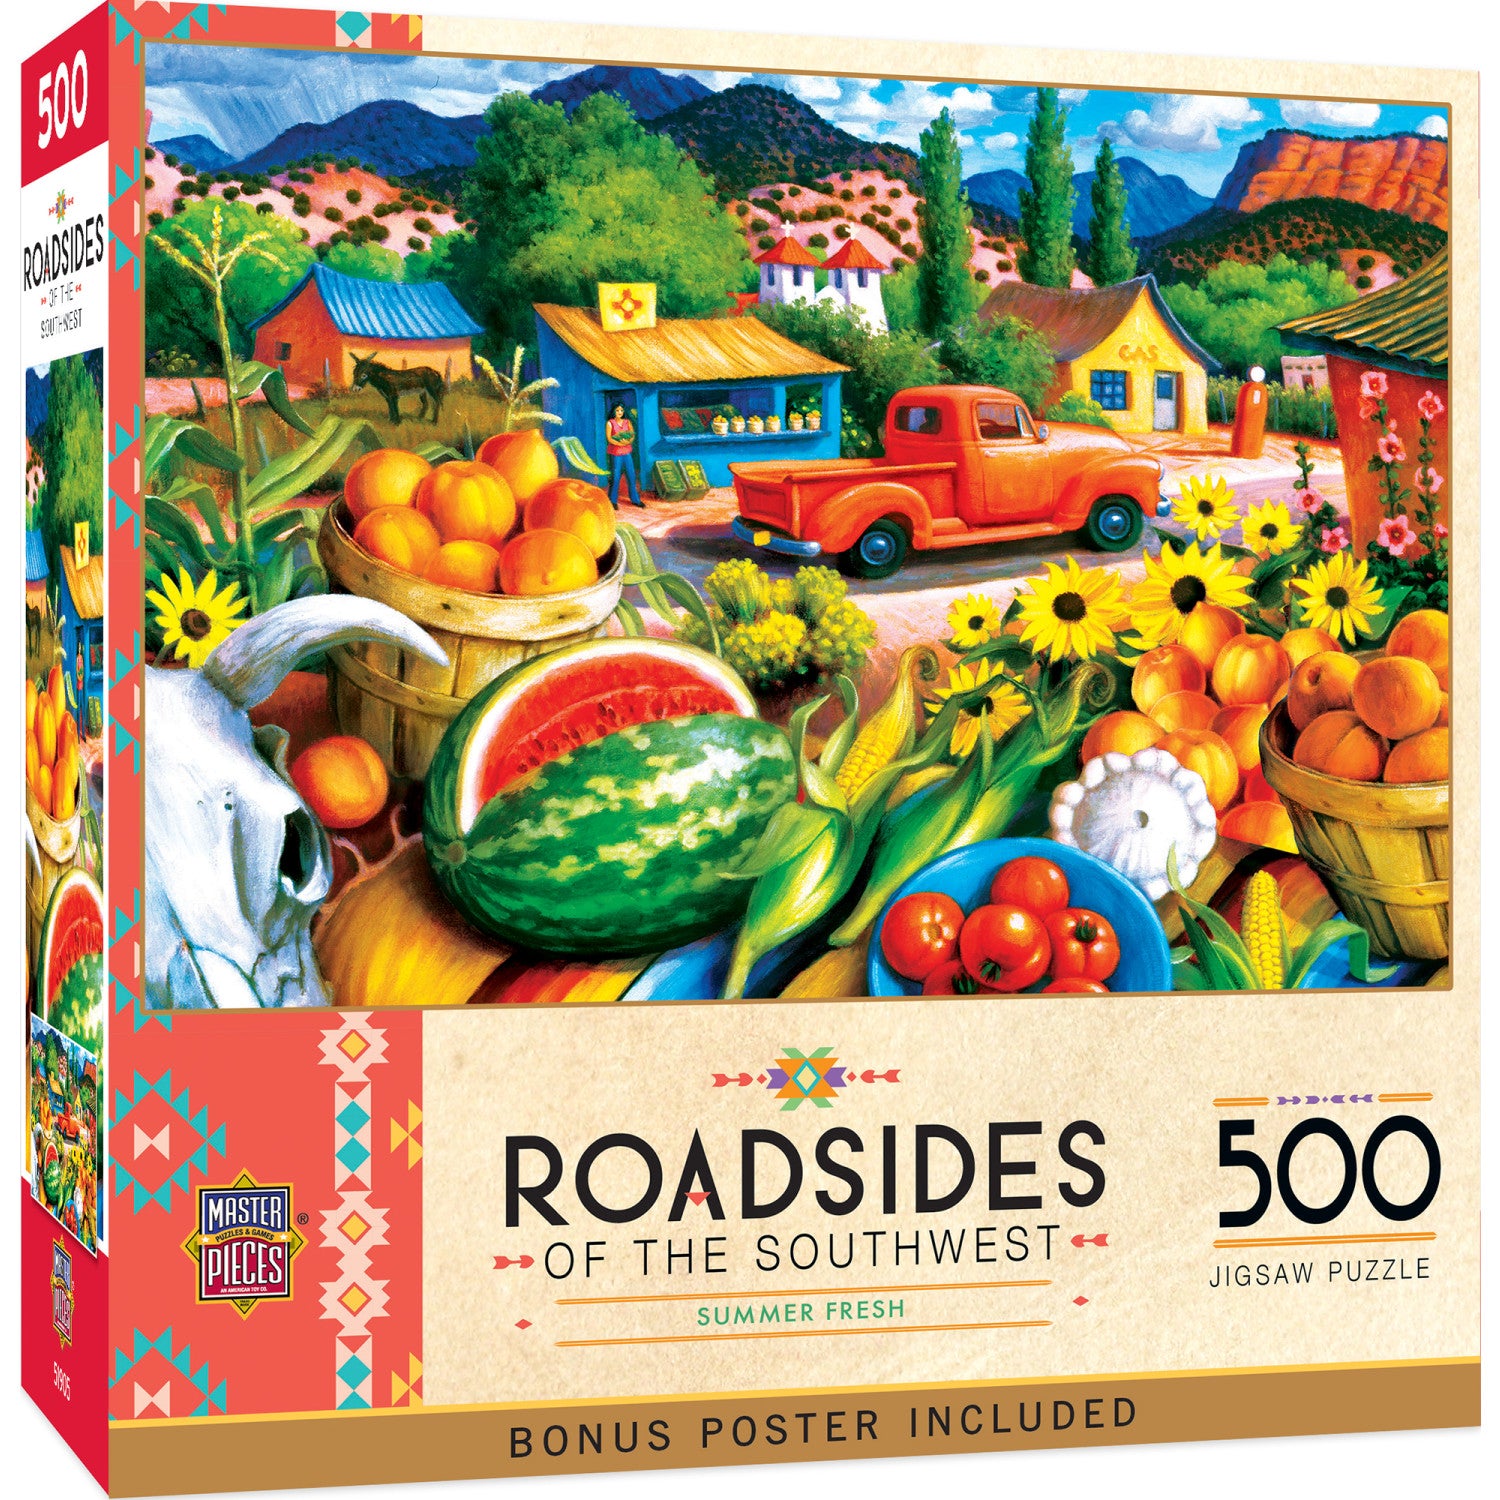 Roadsides of the Southwest - Summer Fresh 500 Piece Jigsaw Puzzle